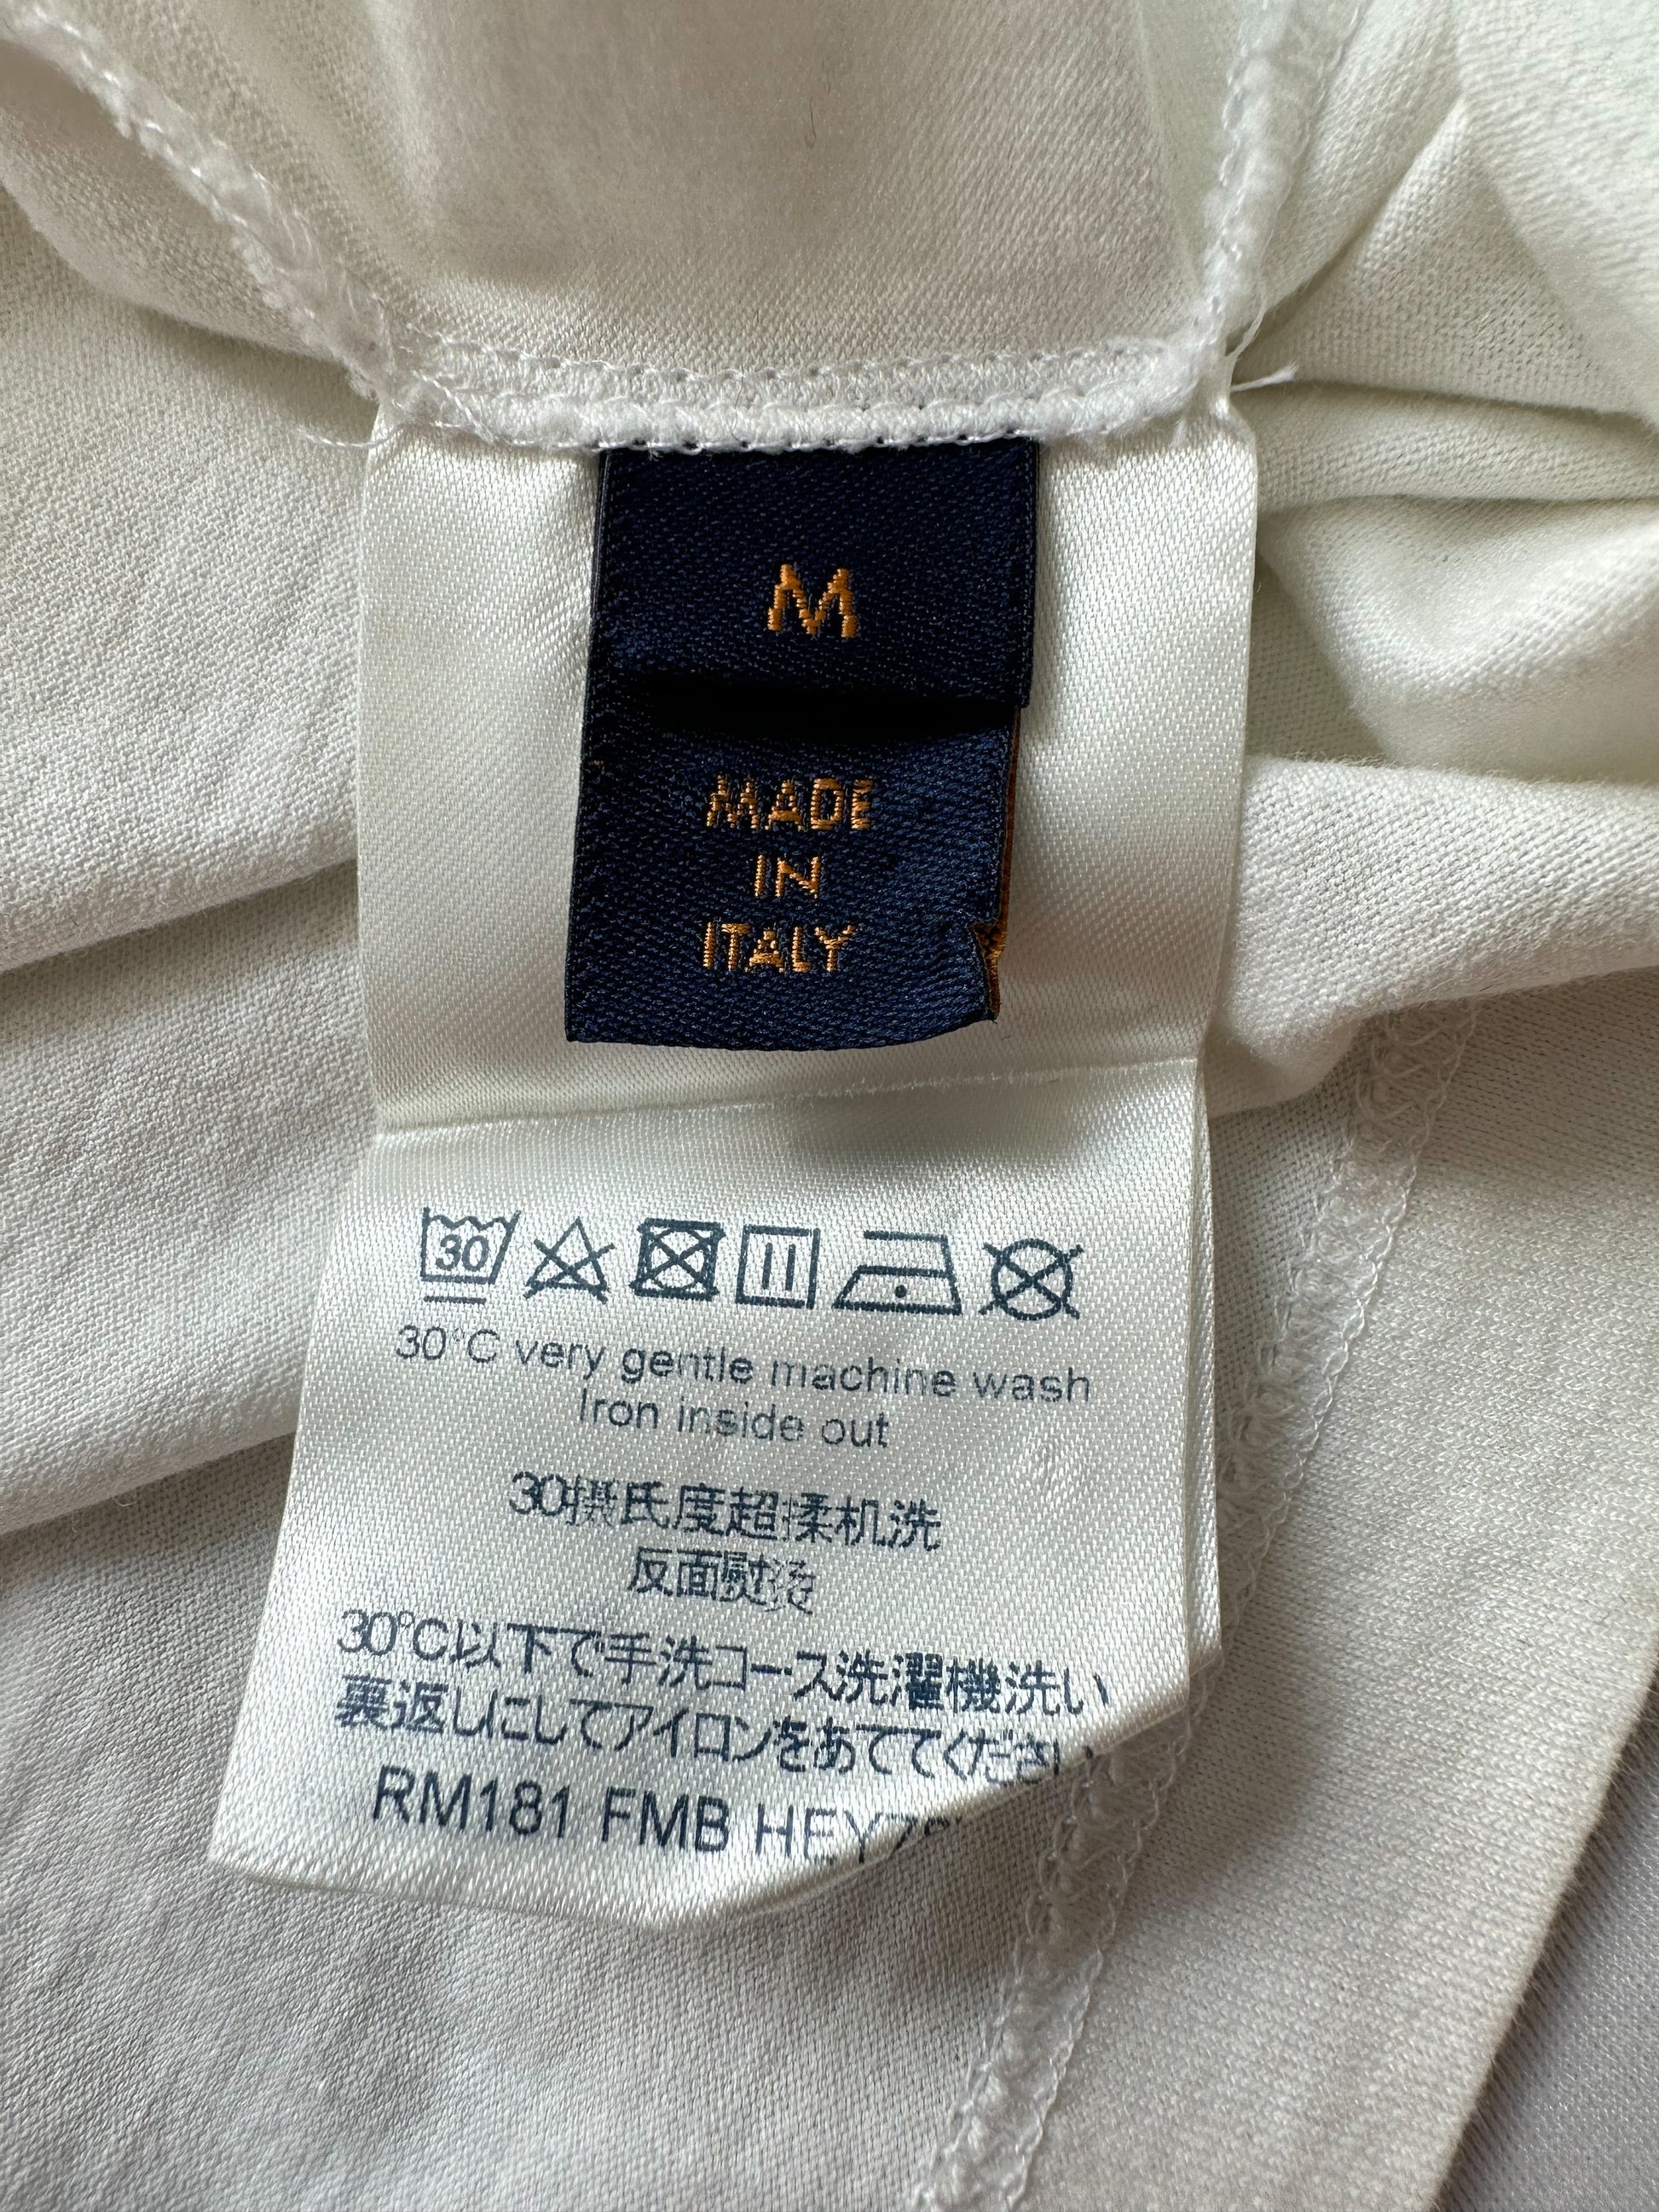 Louis Vuitton Shirt, Louis Vuitton Lips White Luxury Brand T-Shirt For Men  Women - Muranotex Store